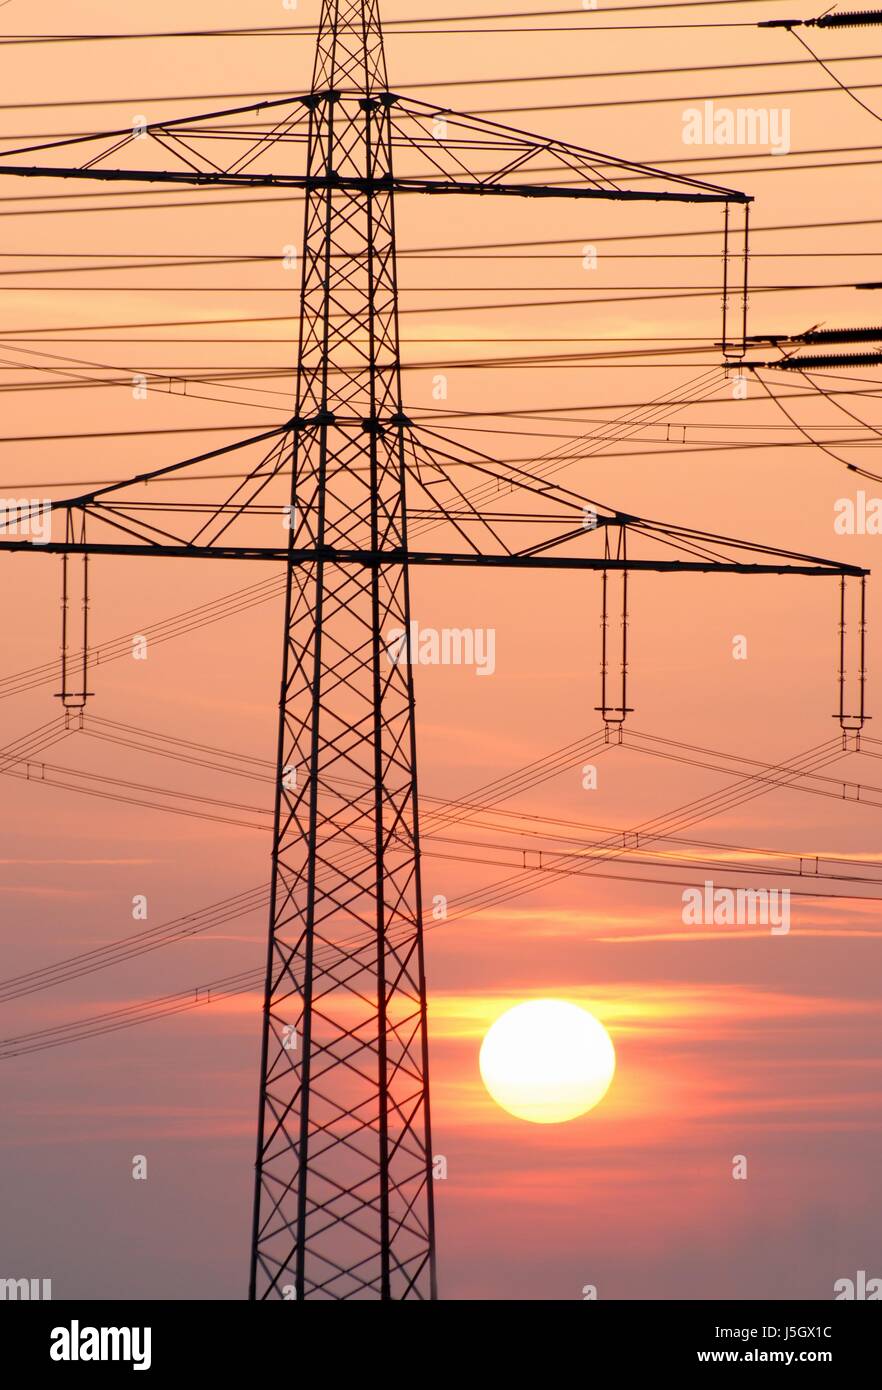 environment enviroment engineering sunset evening energy power electricity Stock Photo